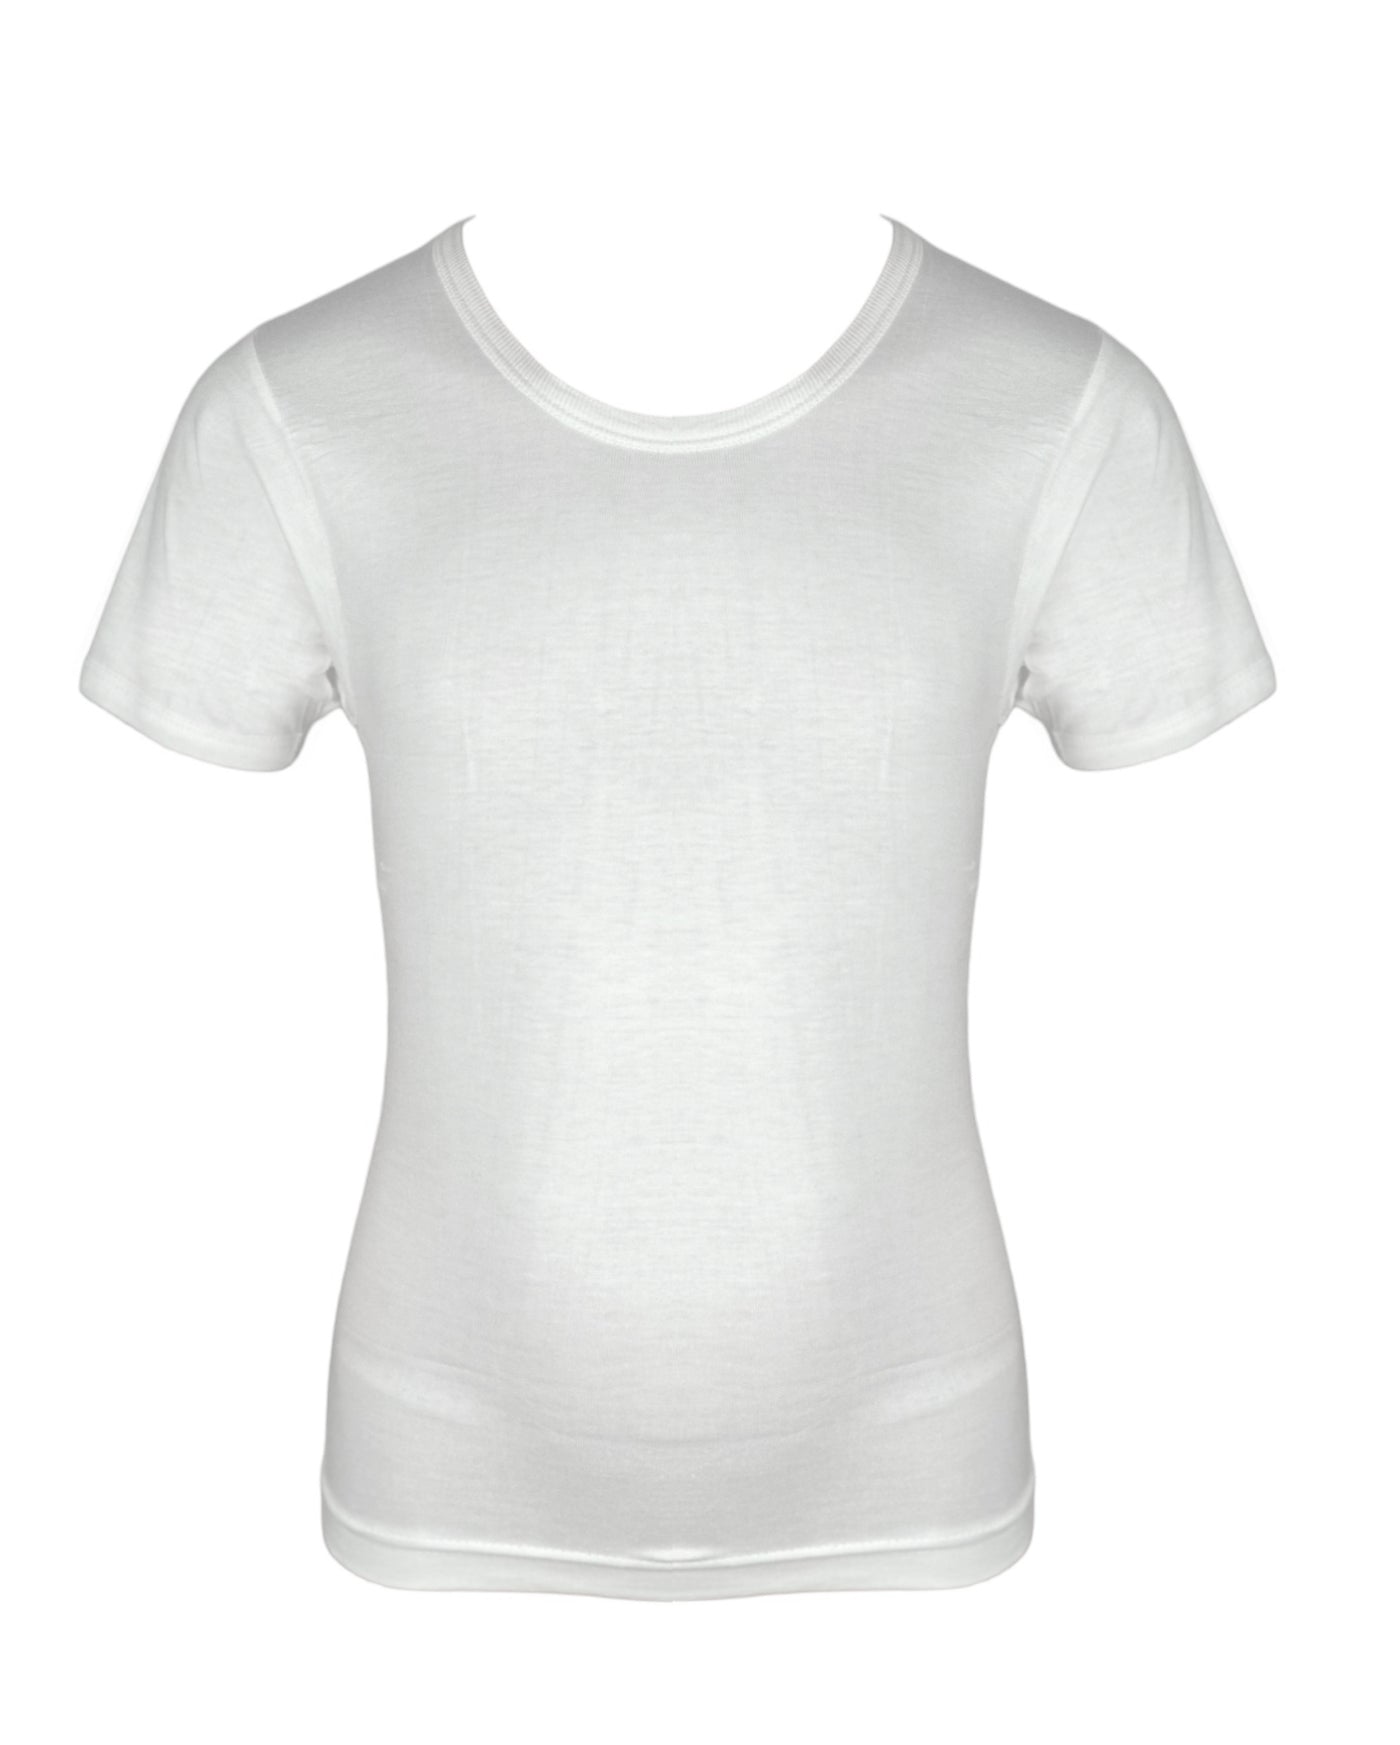 Alphabet Boys T-Shirt White 6 Pack (7/8yrs)